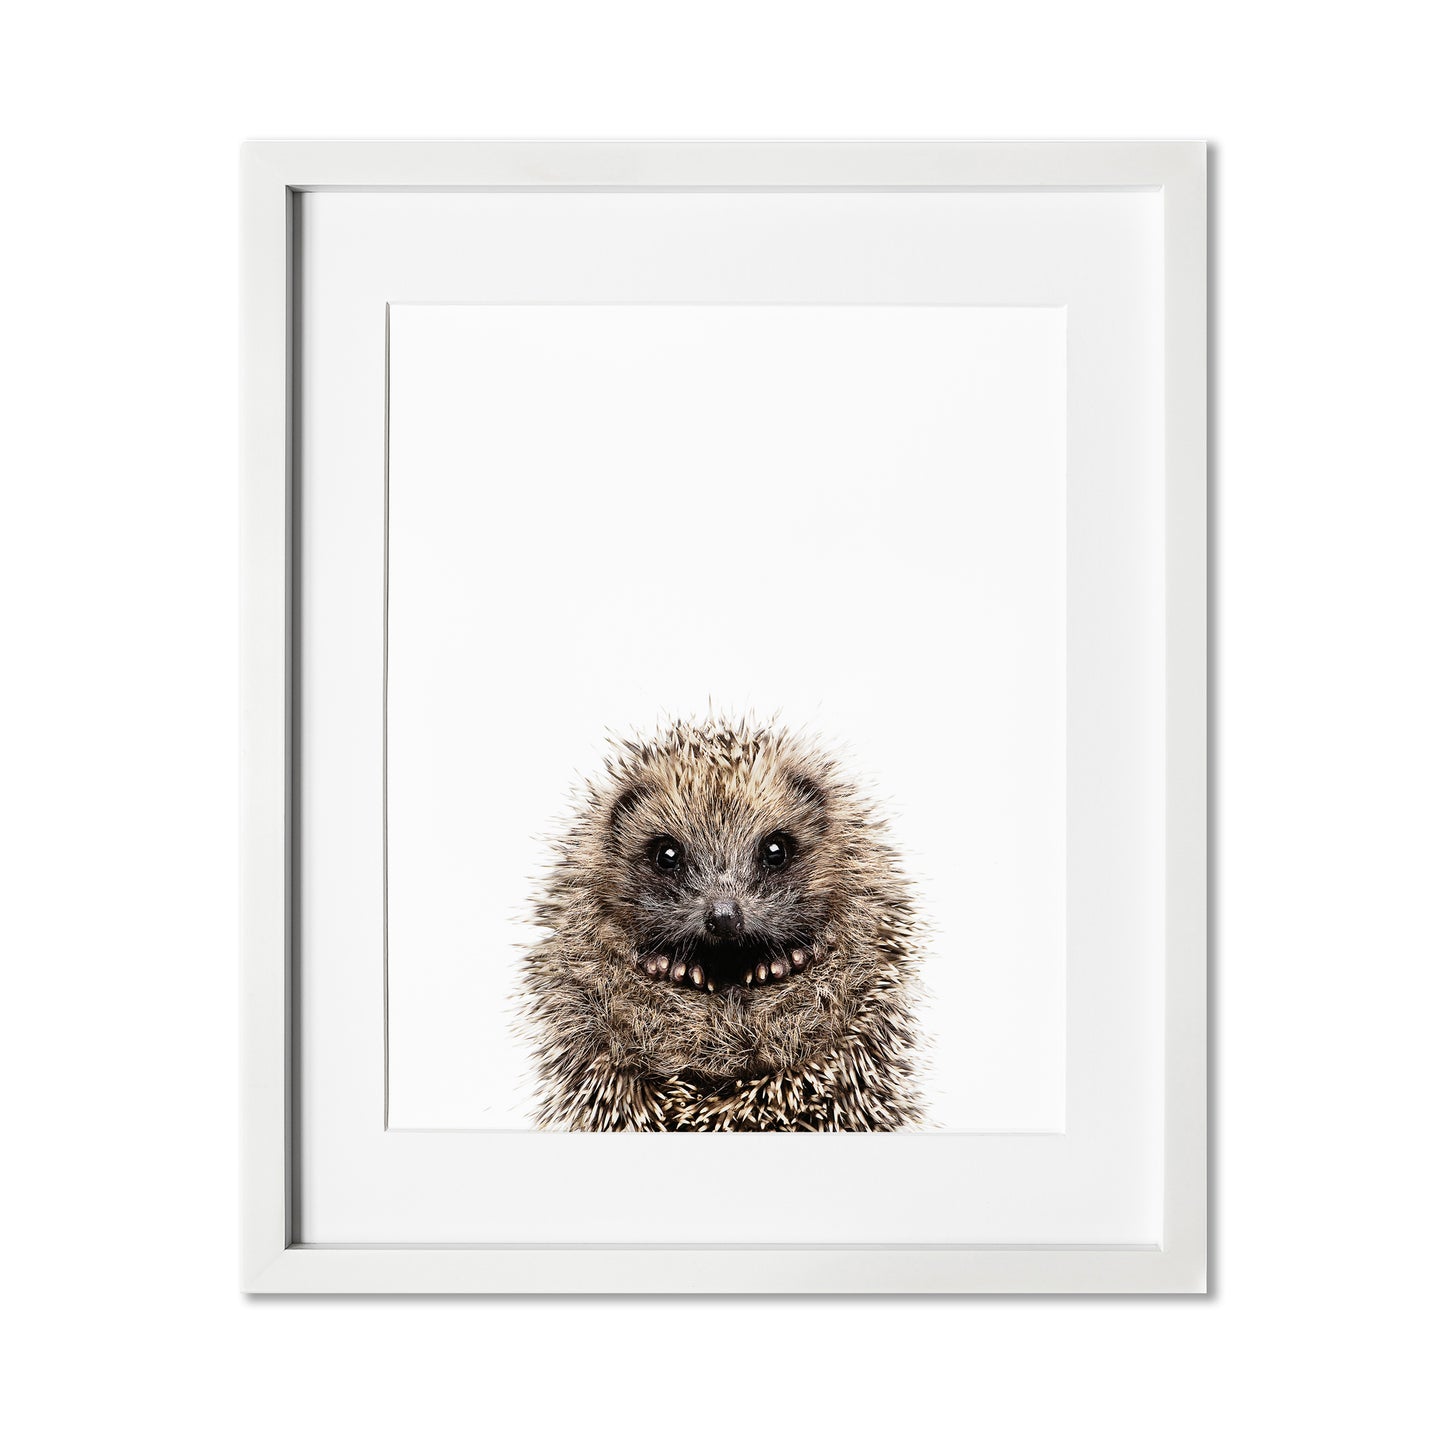 framed Baby Hedgehog Nursery Wall Art Print in a white frame